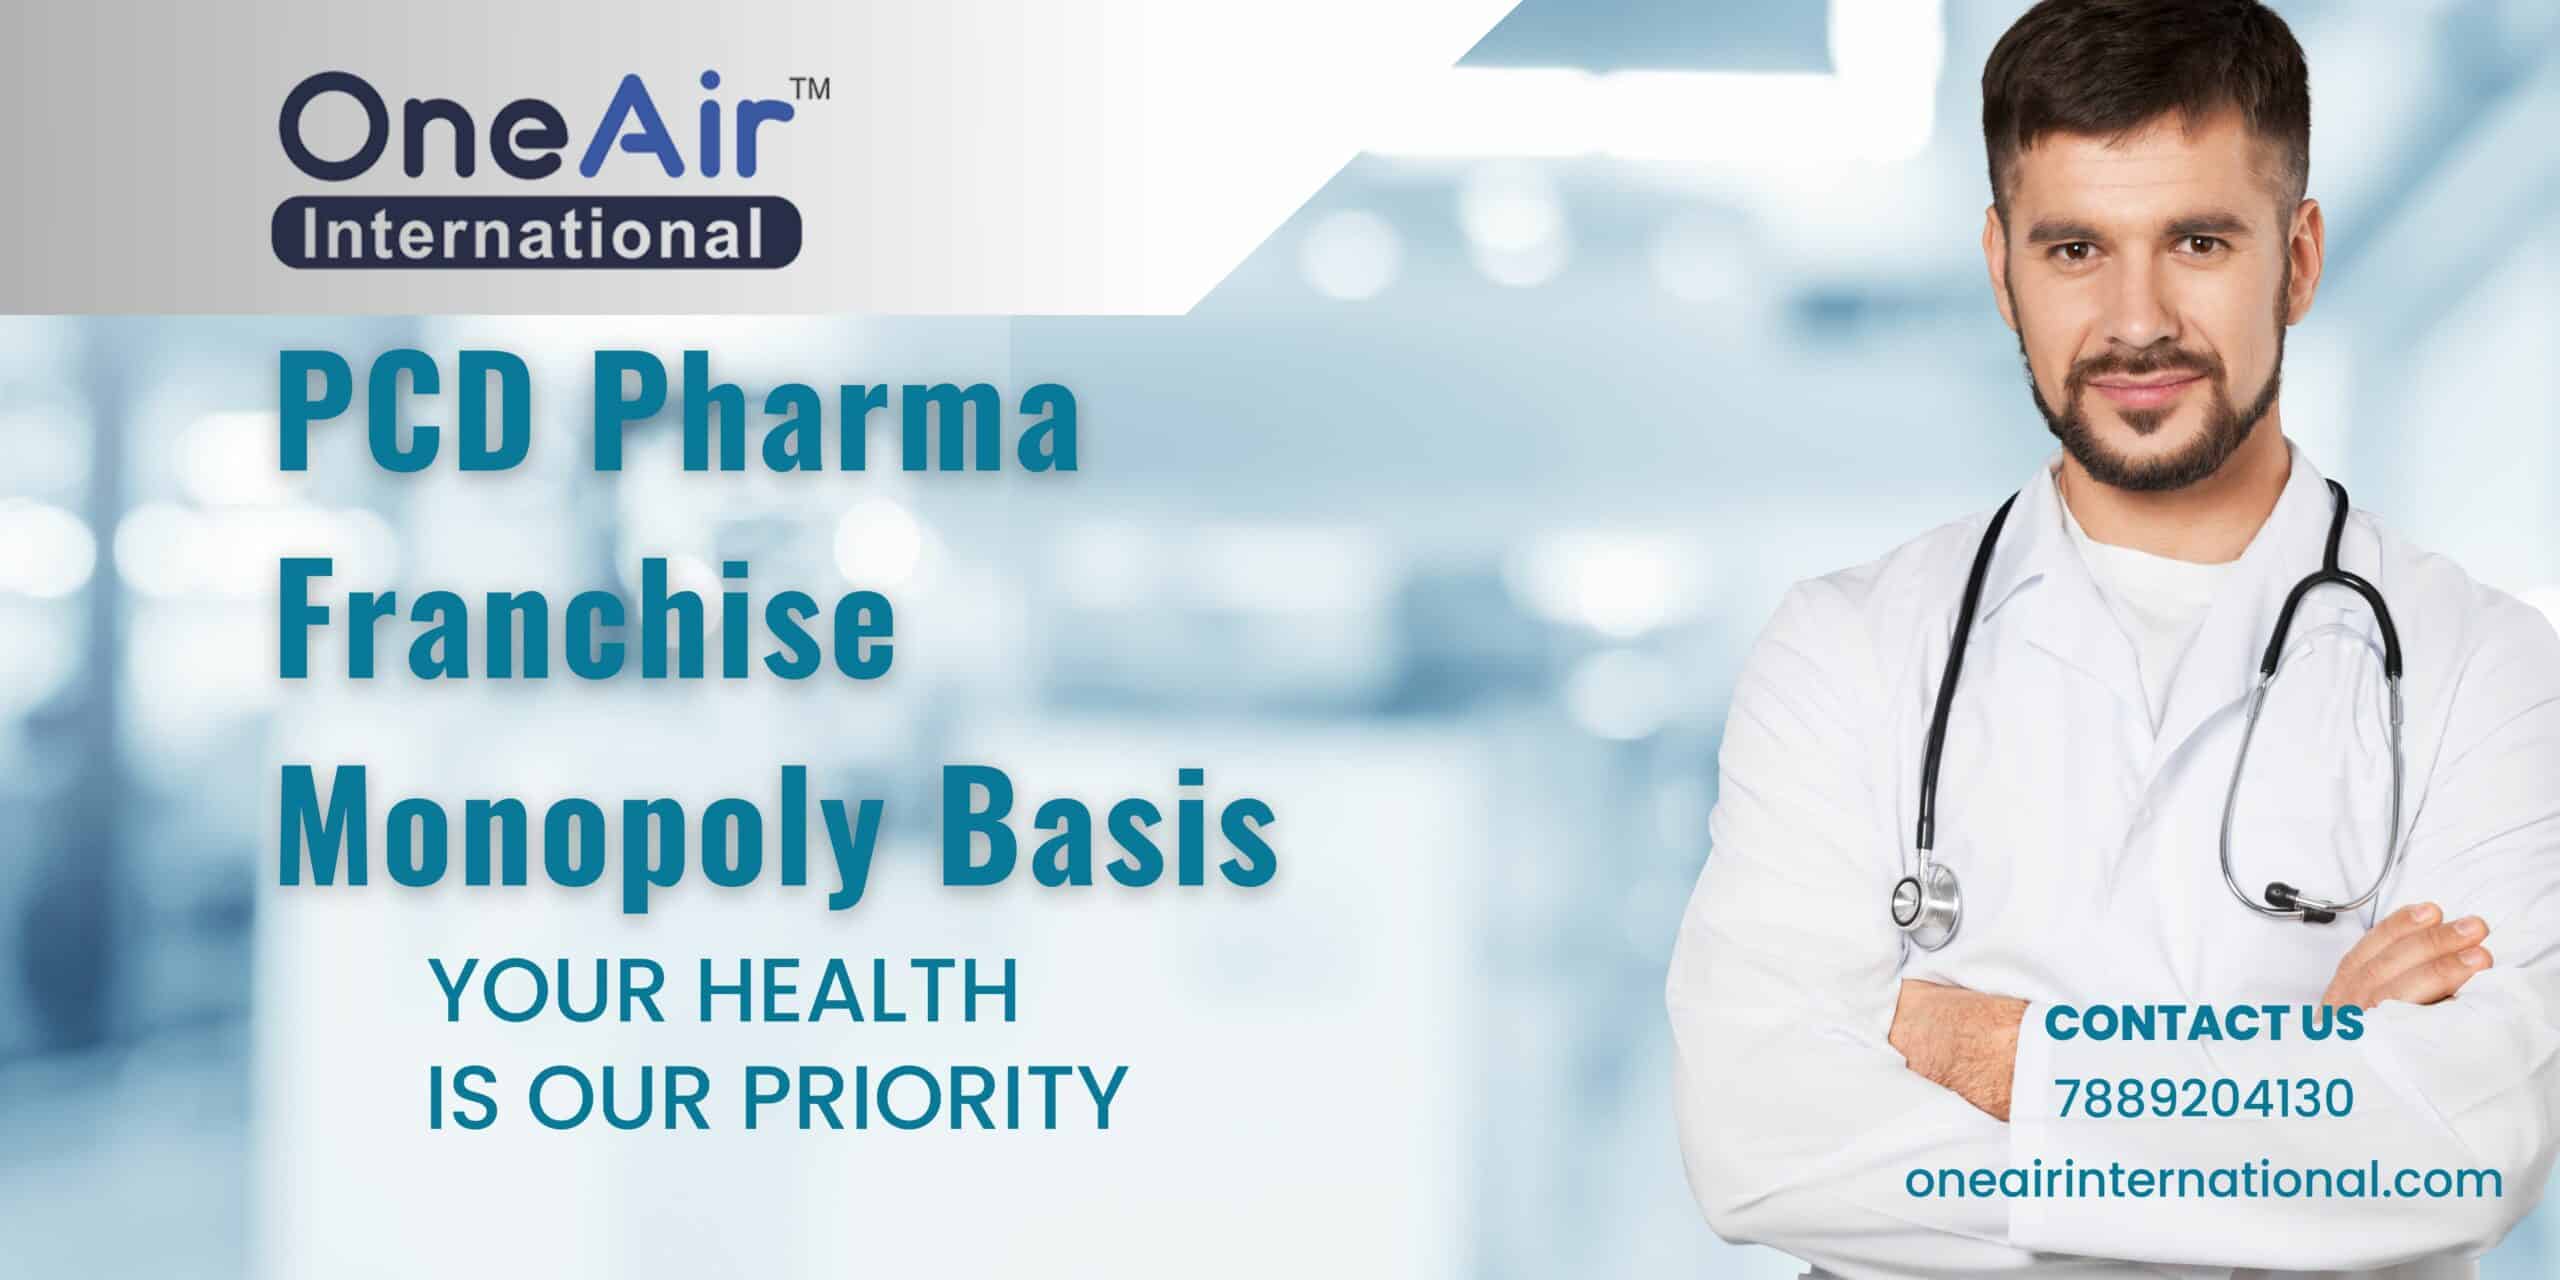 One Air International - PCD Pharma Franchise Monopoly Benefits